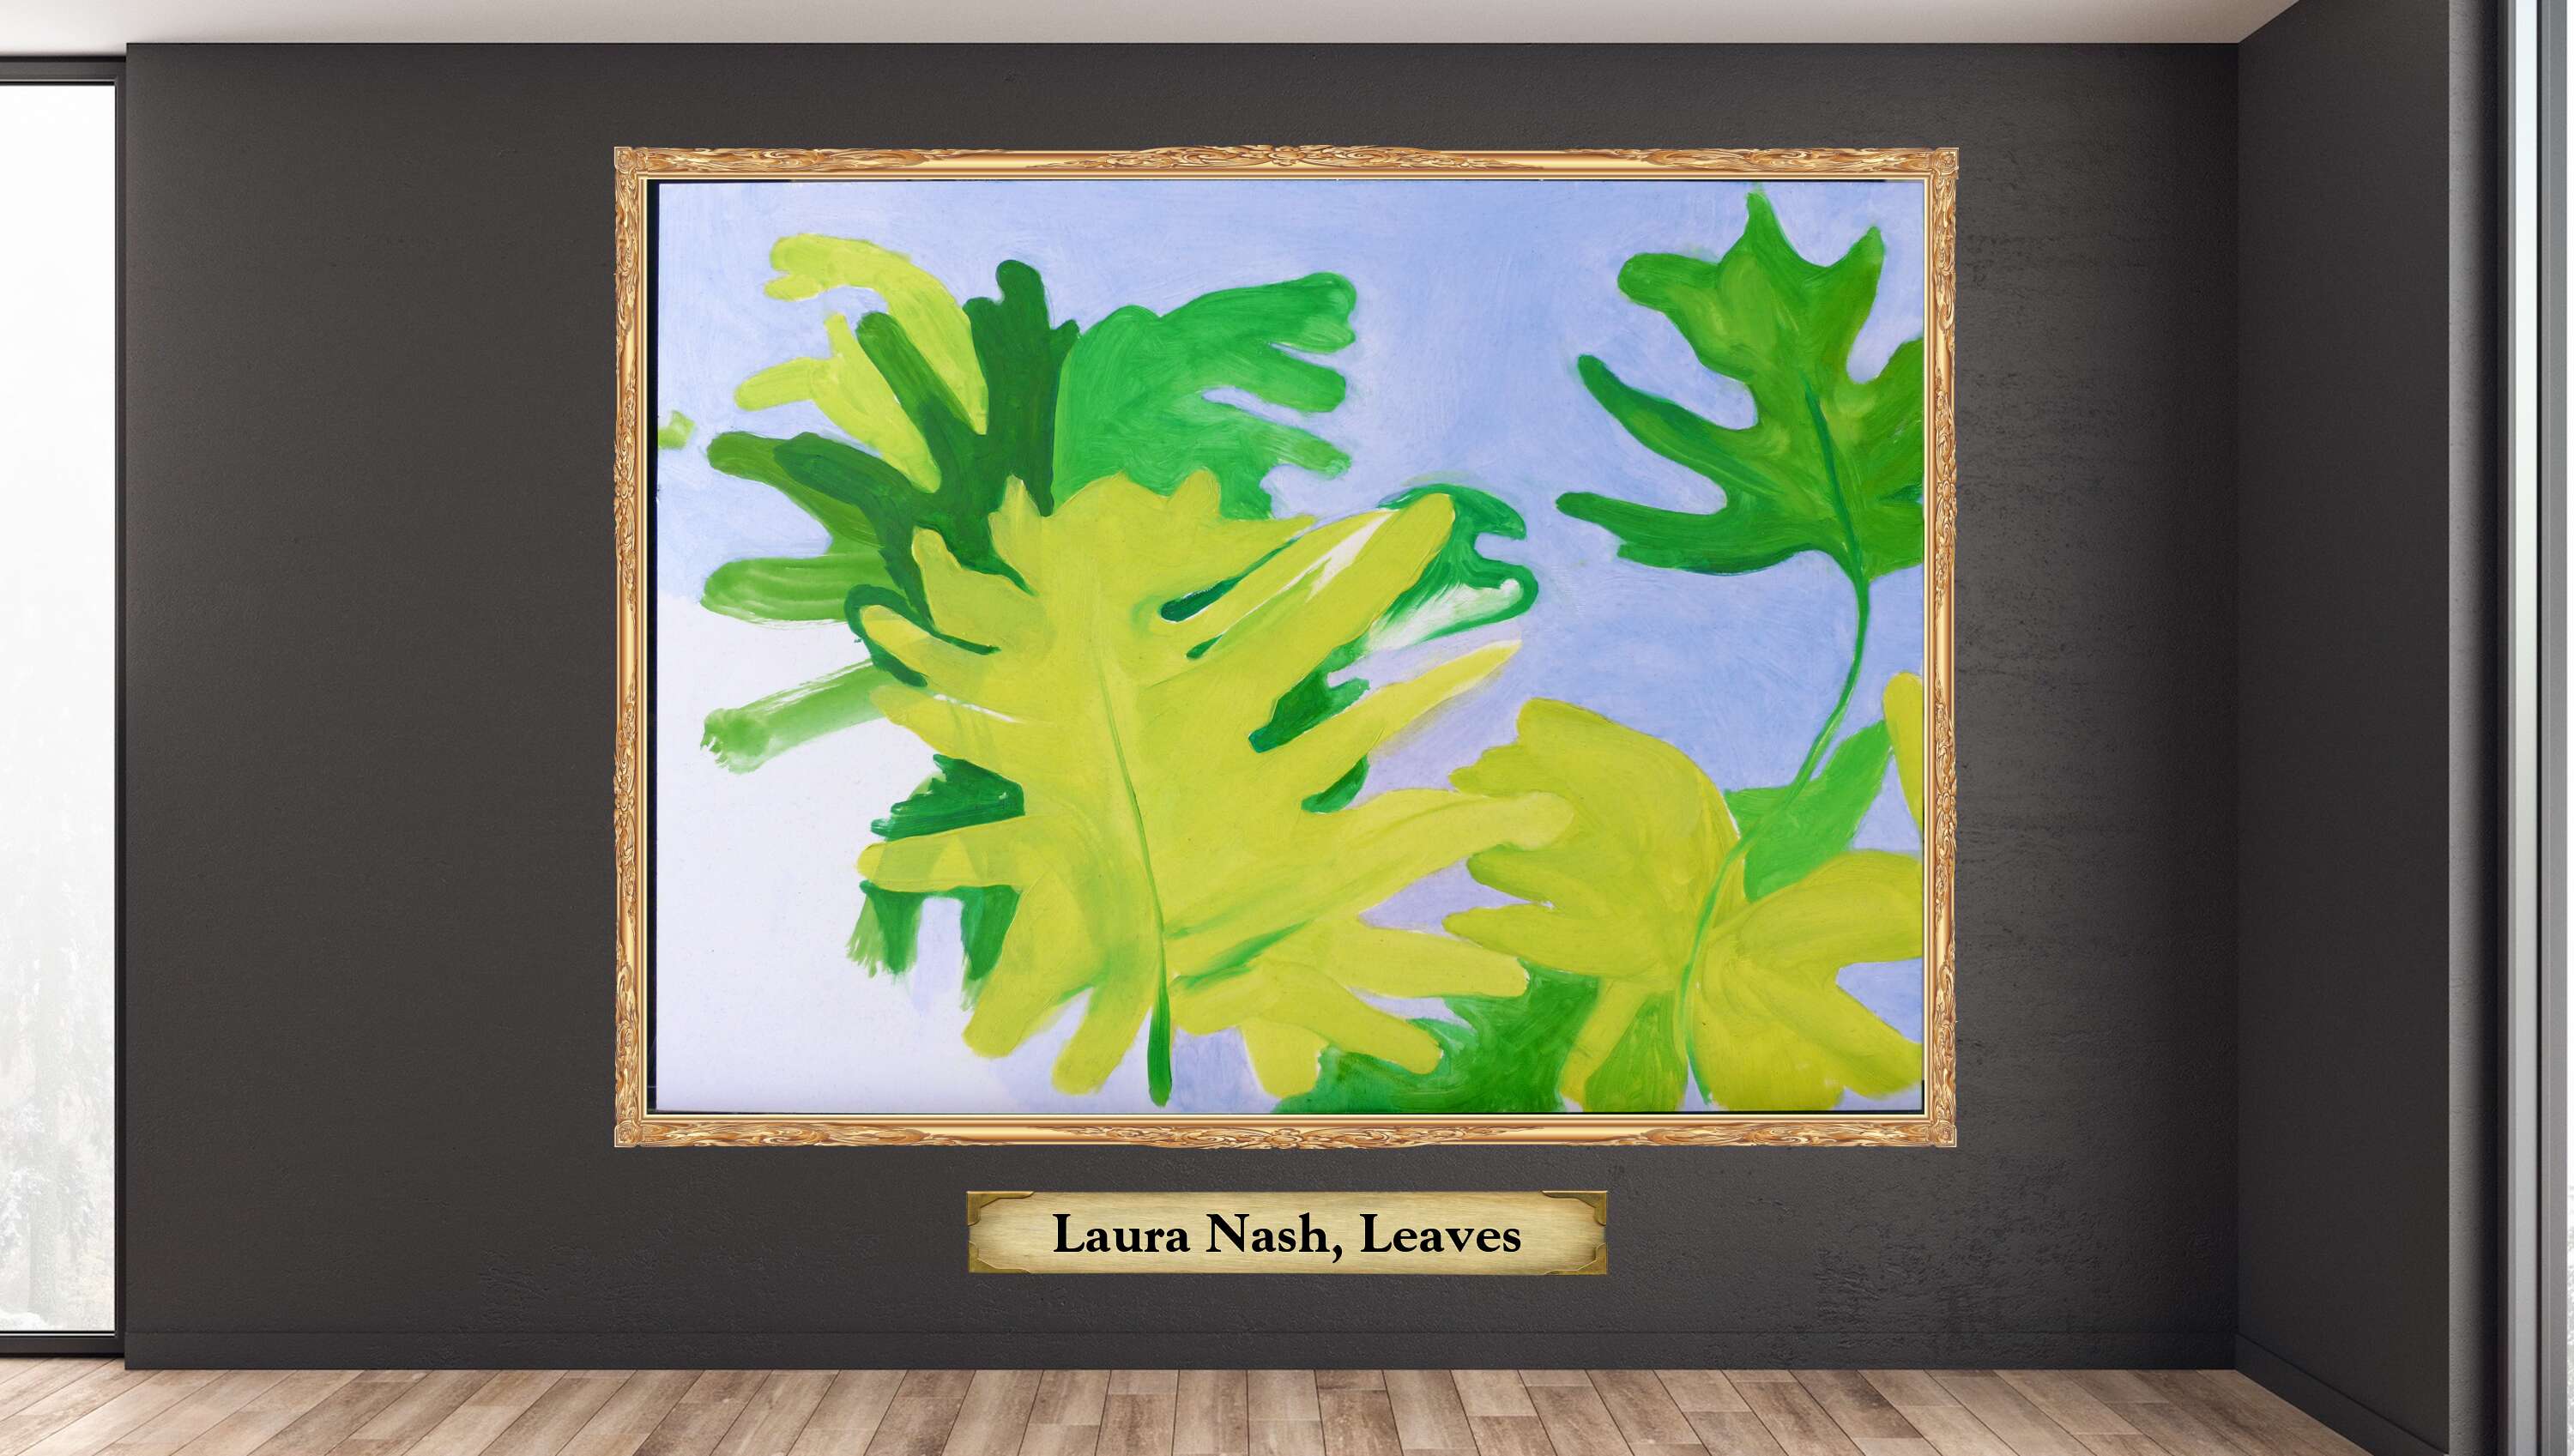 Laura Nash, Leaves